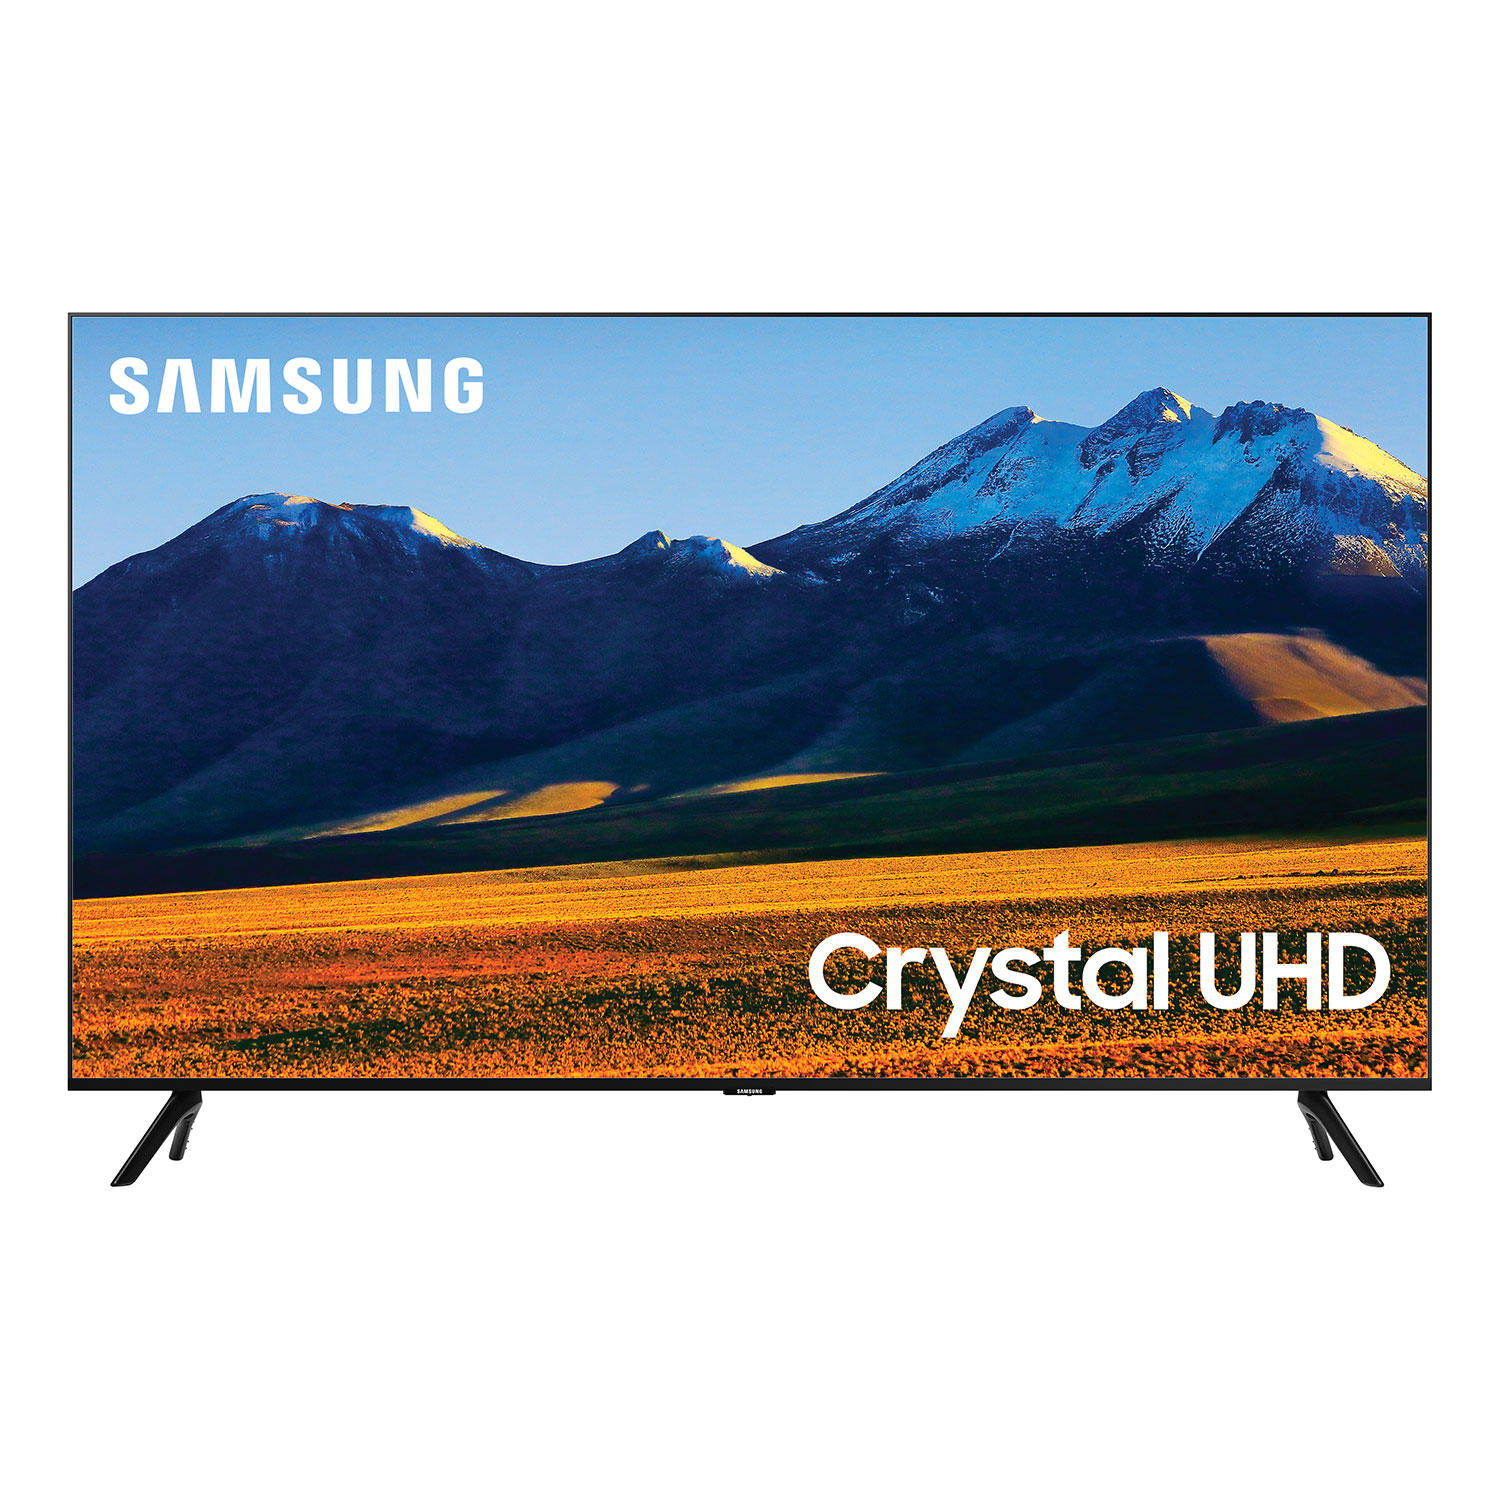 Samsung UN86TU9010FXZA 86″ 4K Crystal UHD Smart TV with HDR